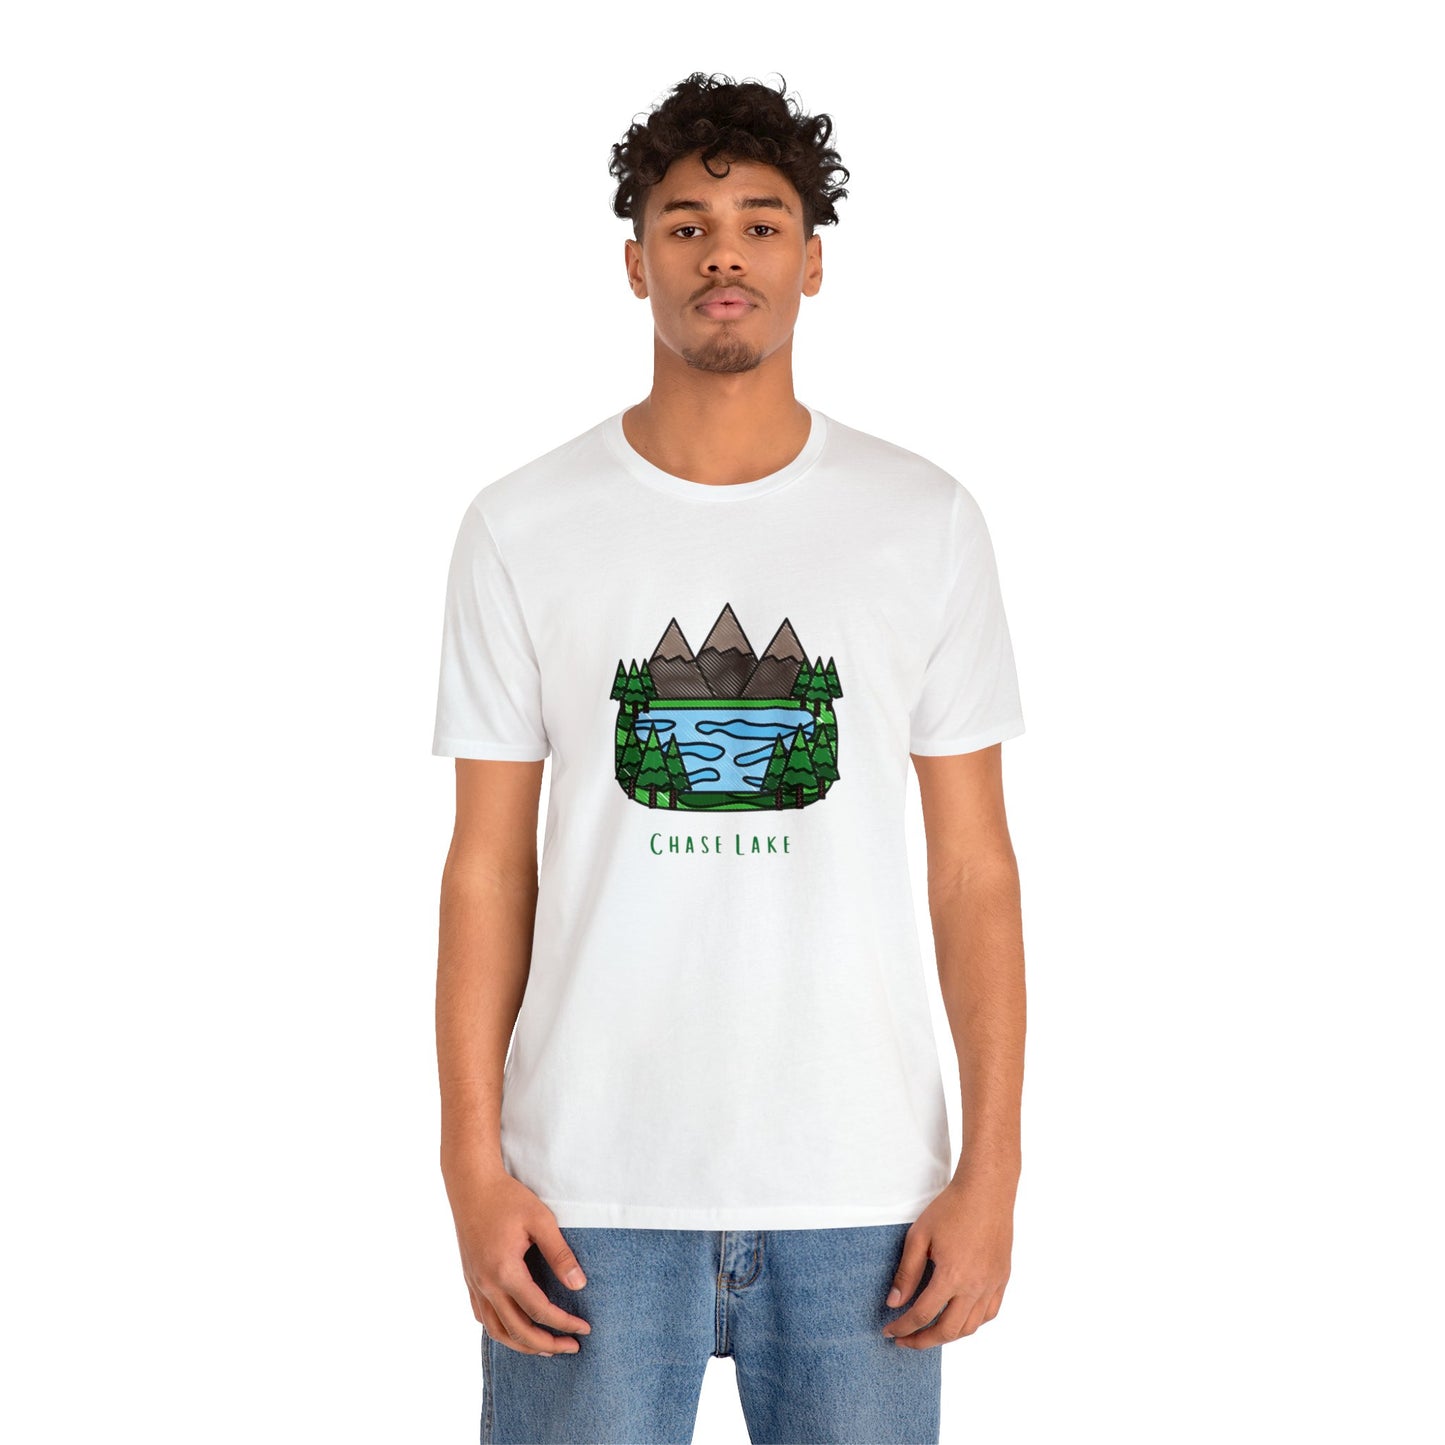 Chase Lake T-shirt